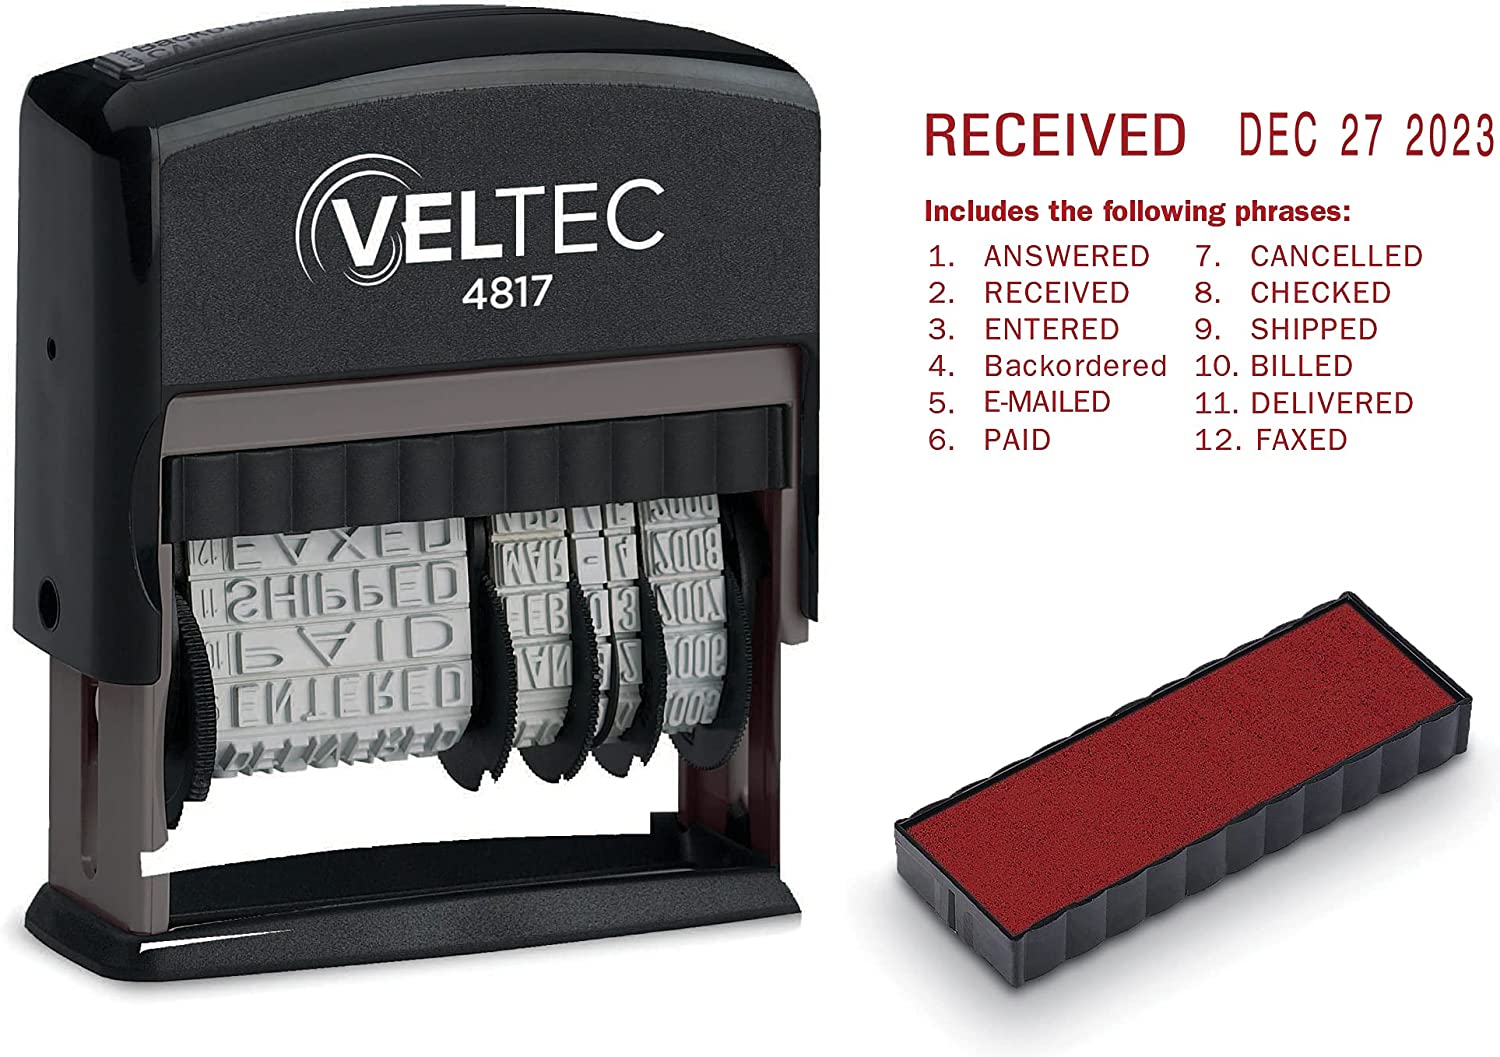 Veltec Roller Stamp Refill Ink for Identity Protection Stamps (3 Pack) –  Veltec Plus